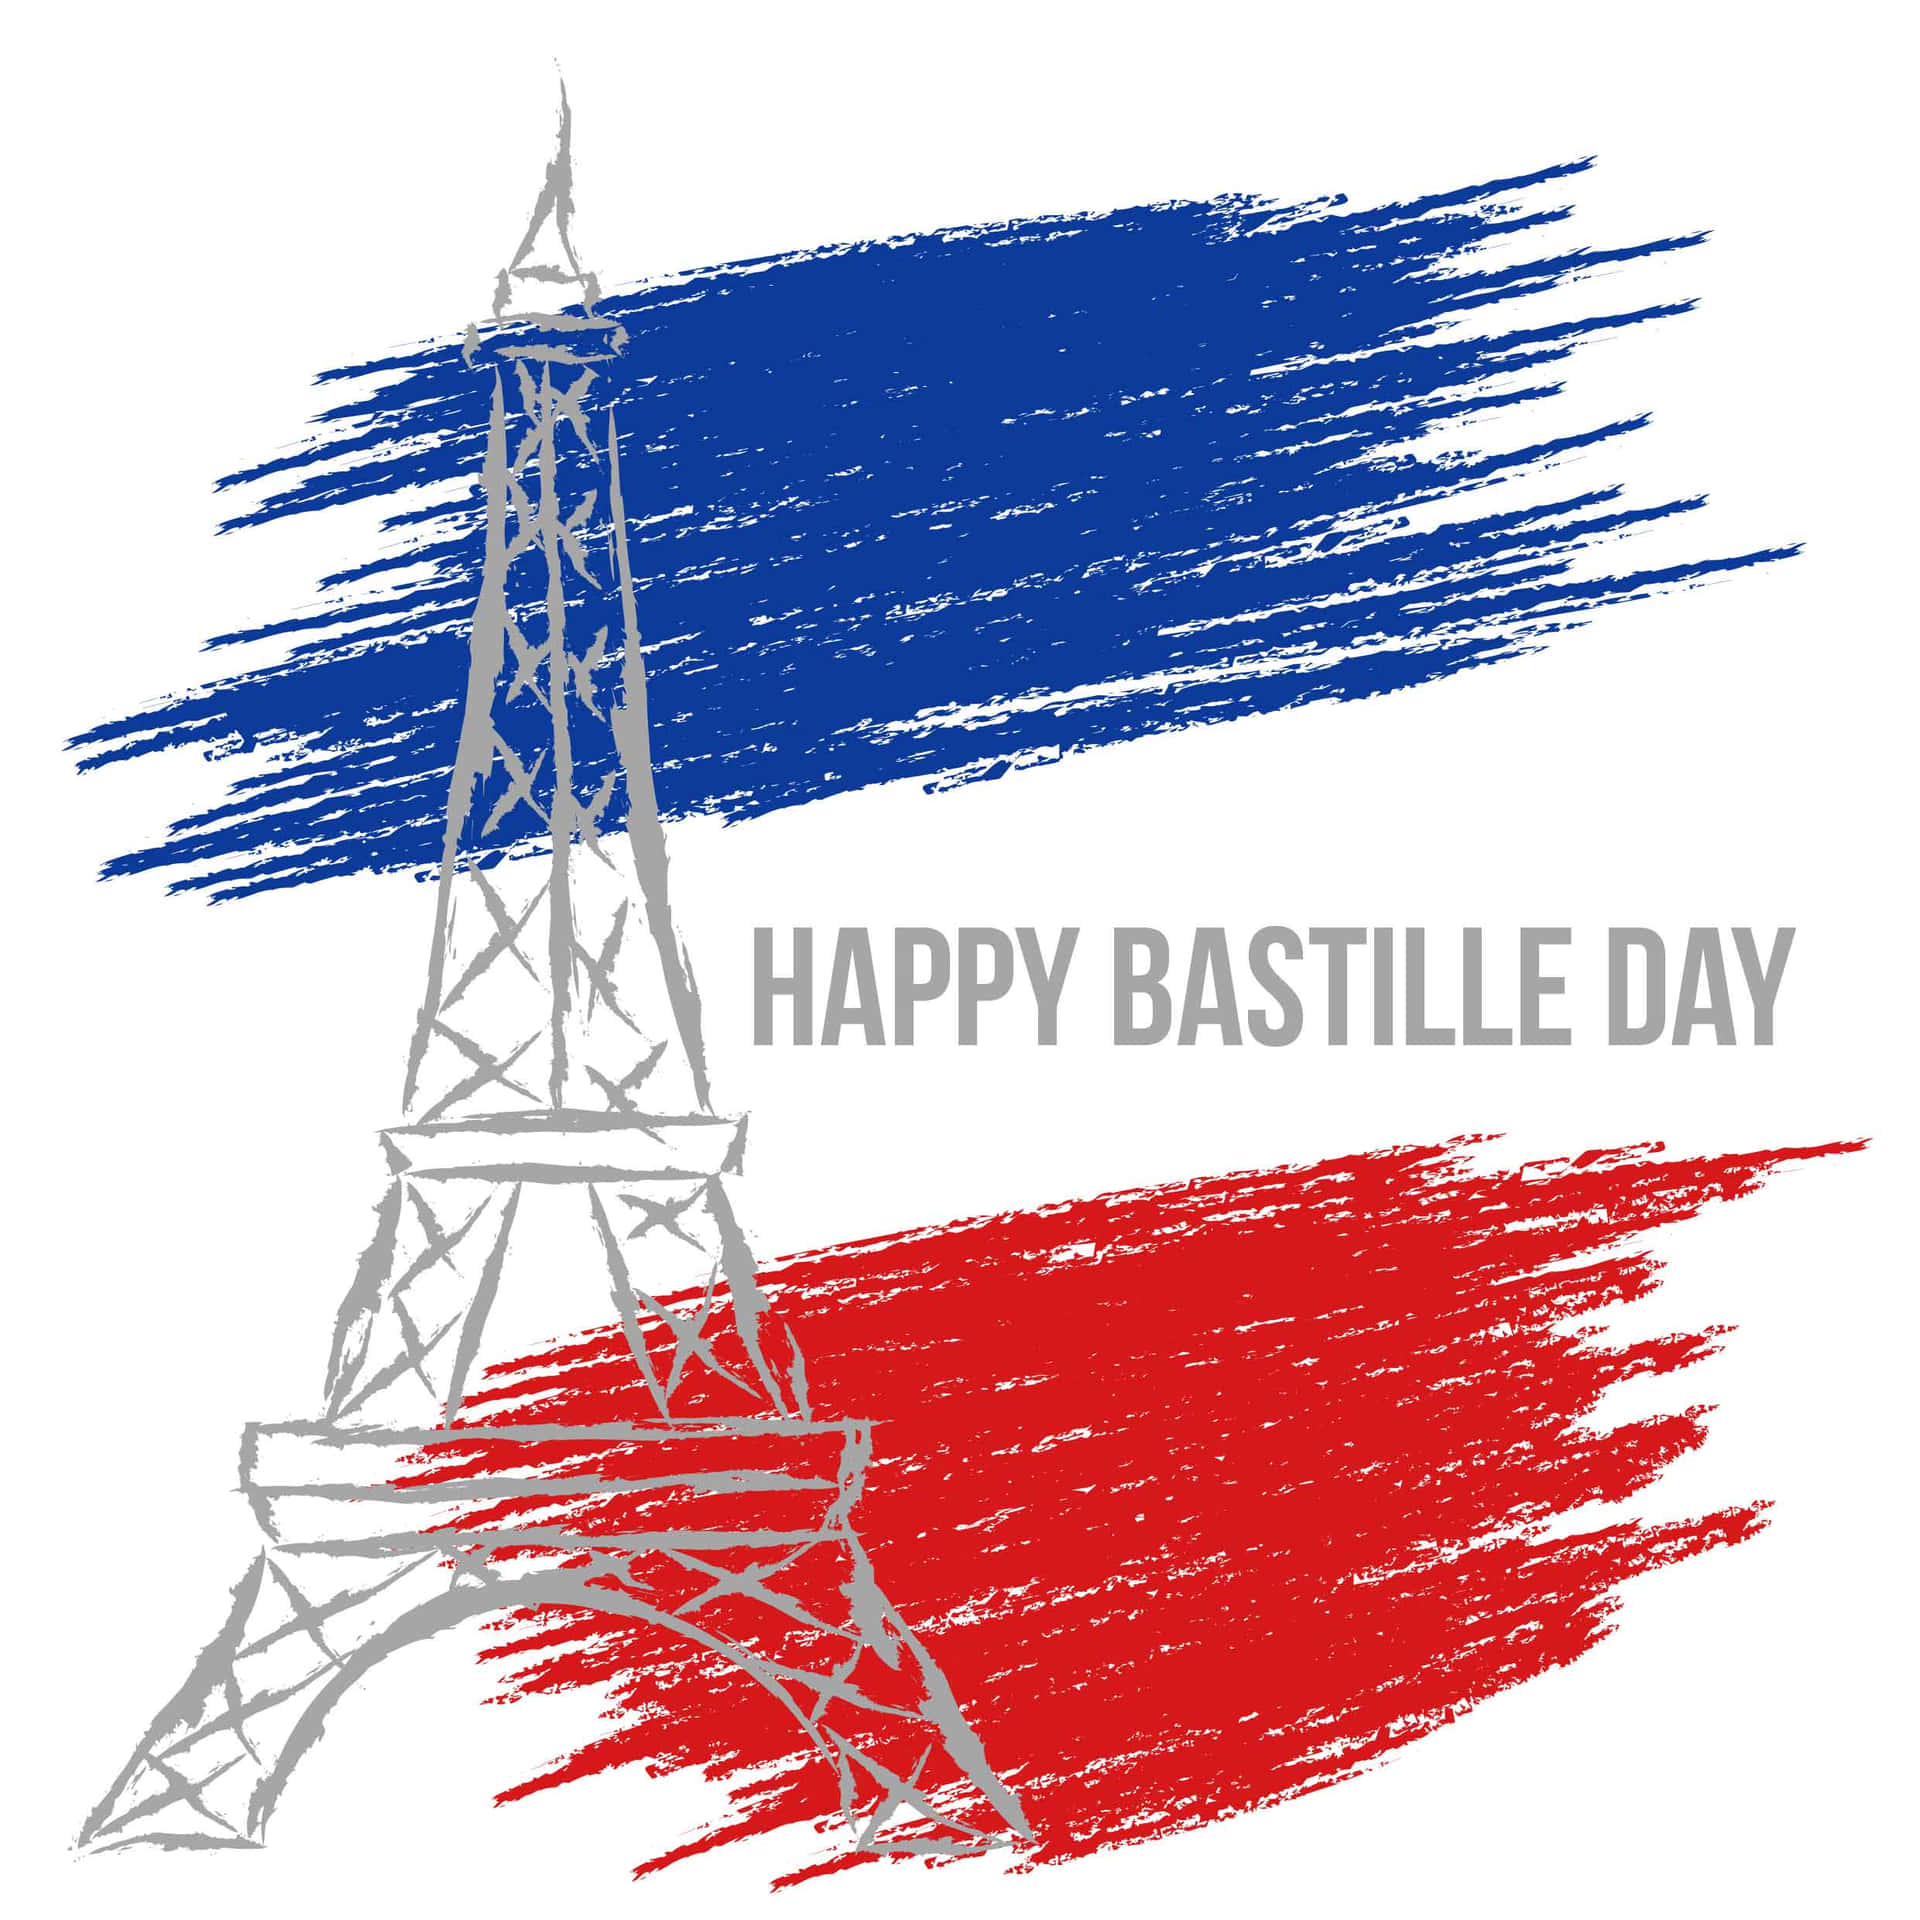 Majestic Fireworks Display Over Eiffel Tower Celebrating Bastille Day Background